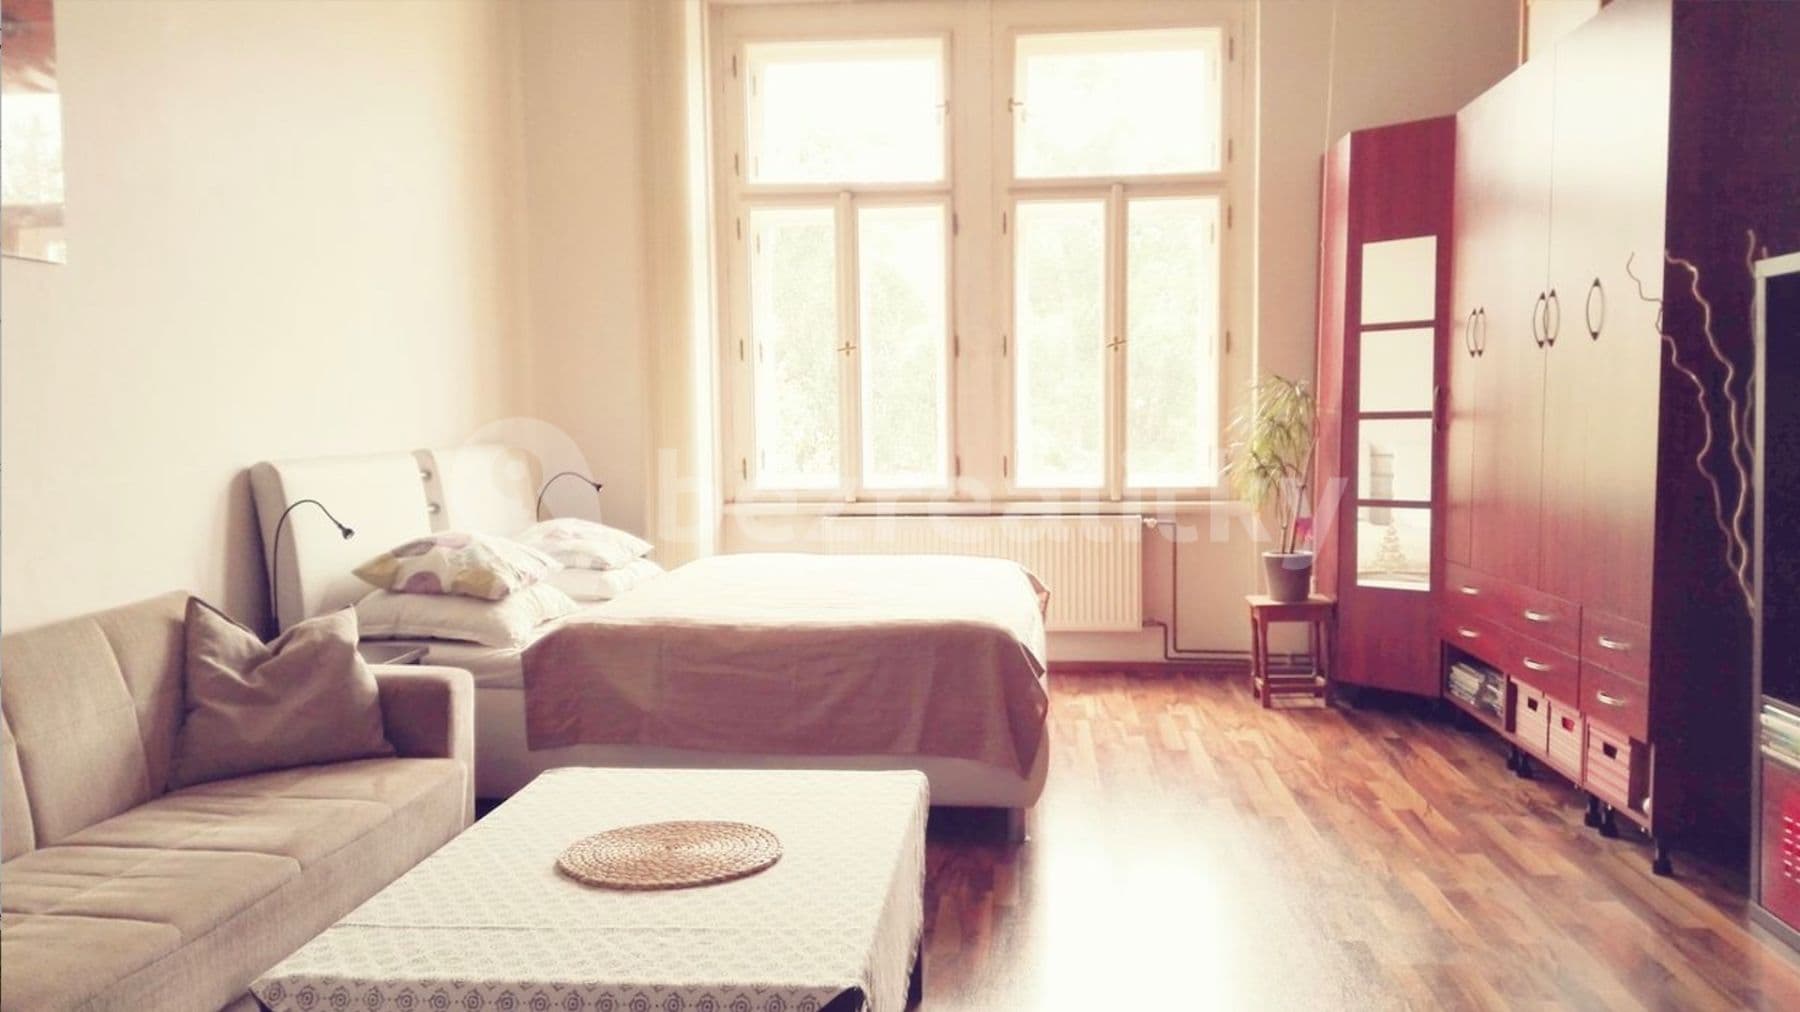 1 bedroom with open-plan kitchen flat for sale, 56 m², Dejvická, Prague, Prague